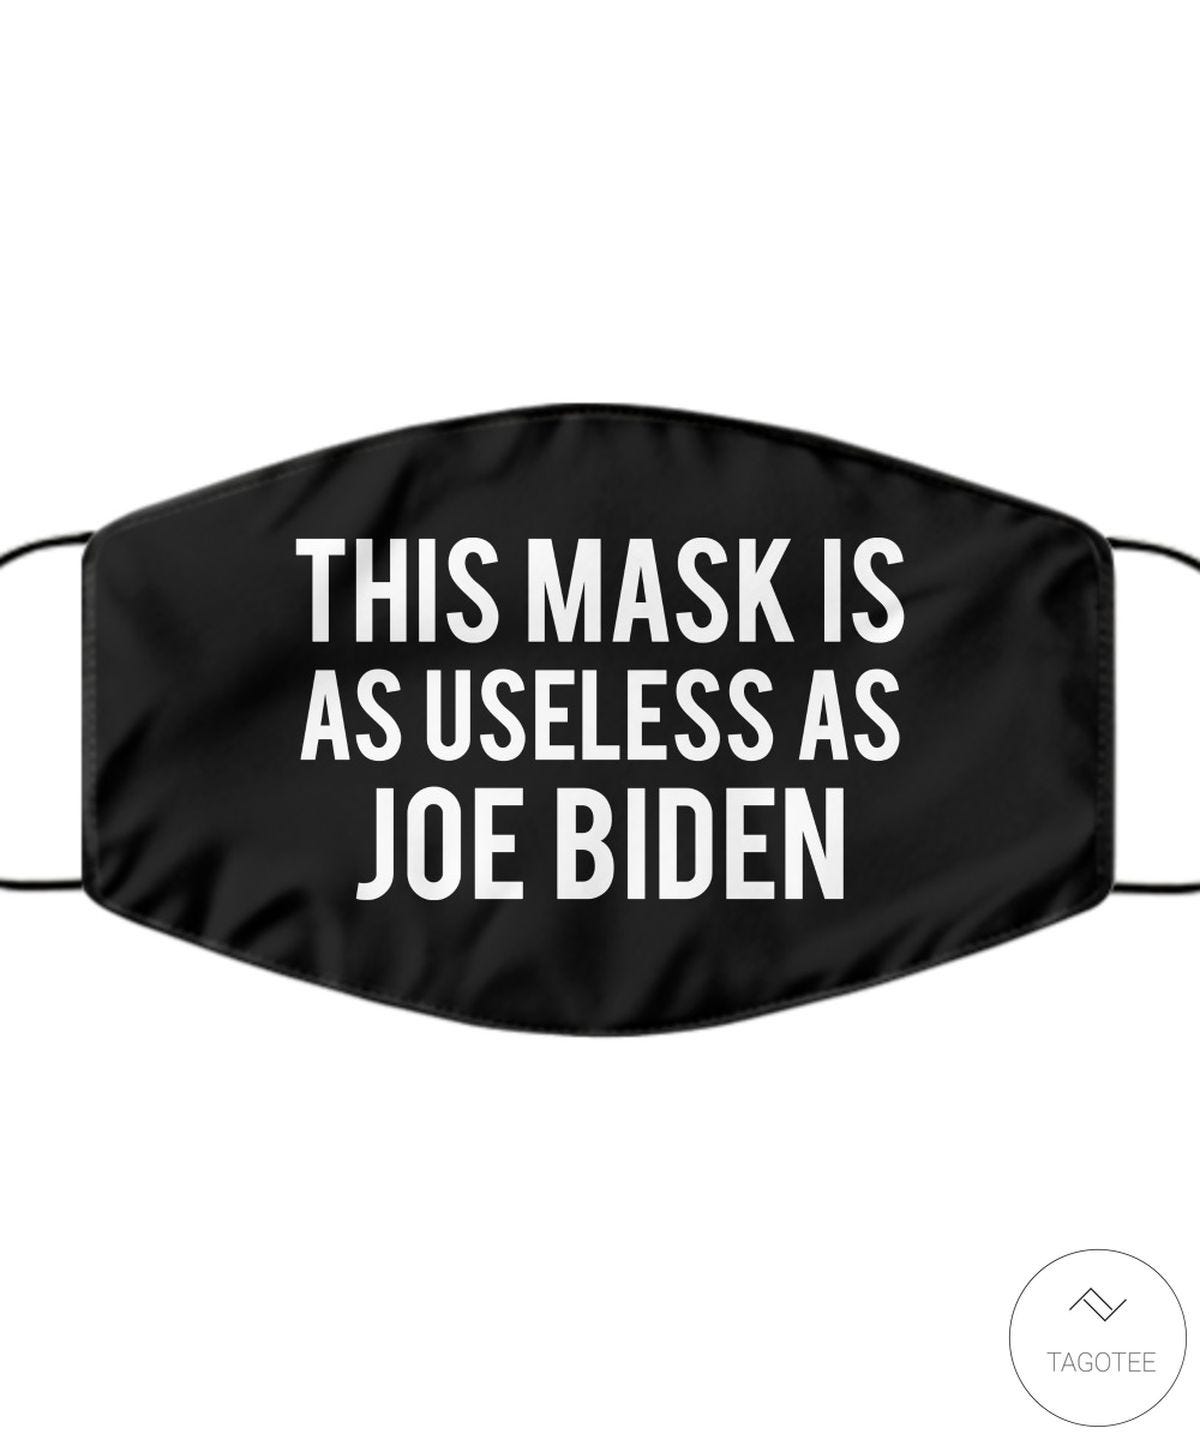 This mask is as useless as Joe Biden face mask by TAGOTEE REVIEWS Medium.